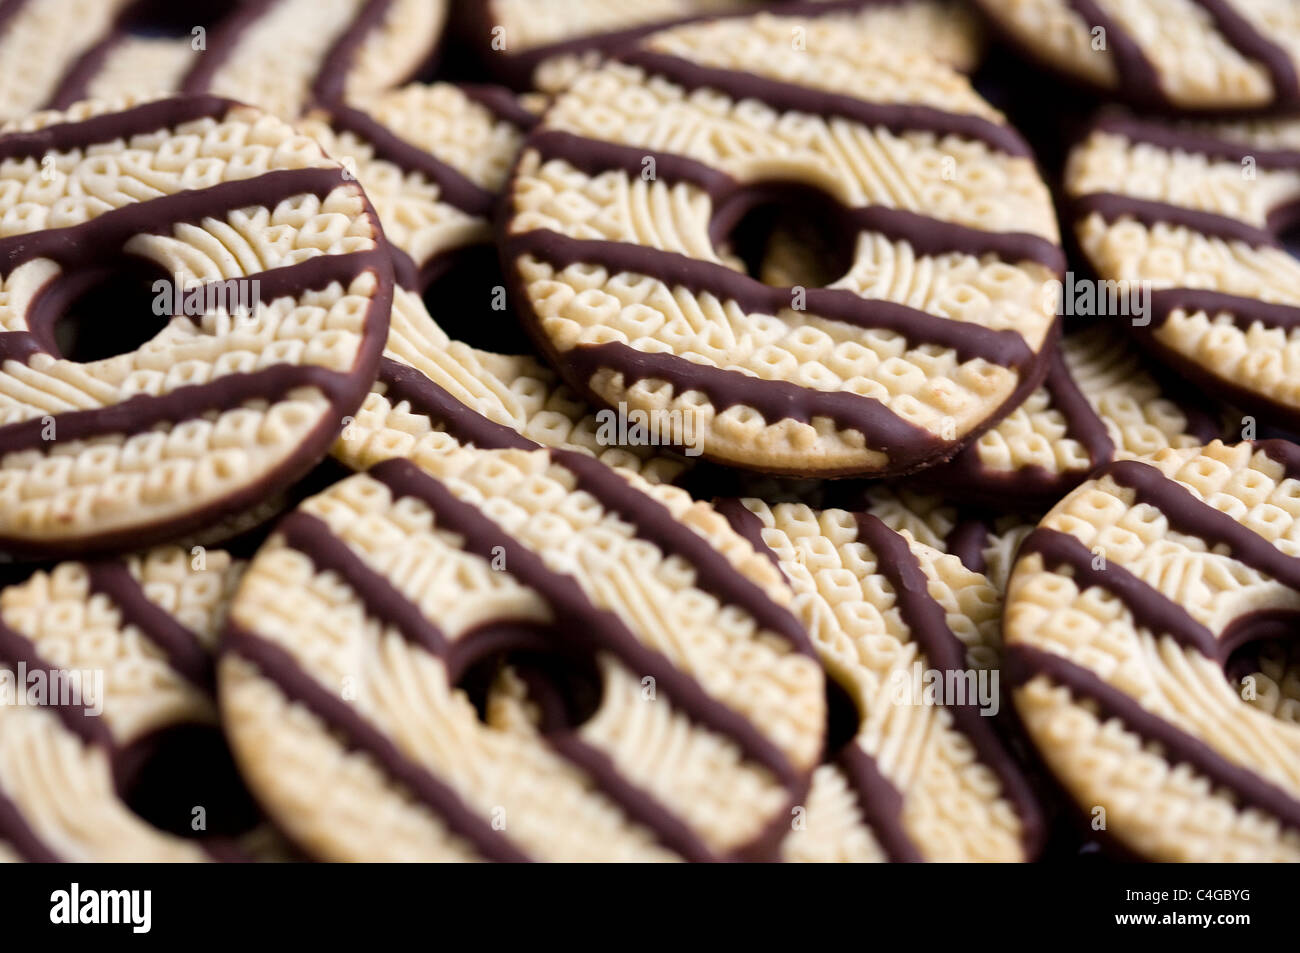 Fudge covered vanilla cookies.  Stock Photo